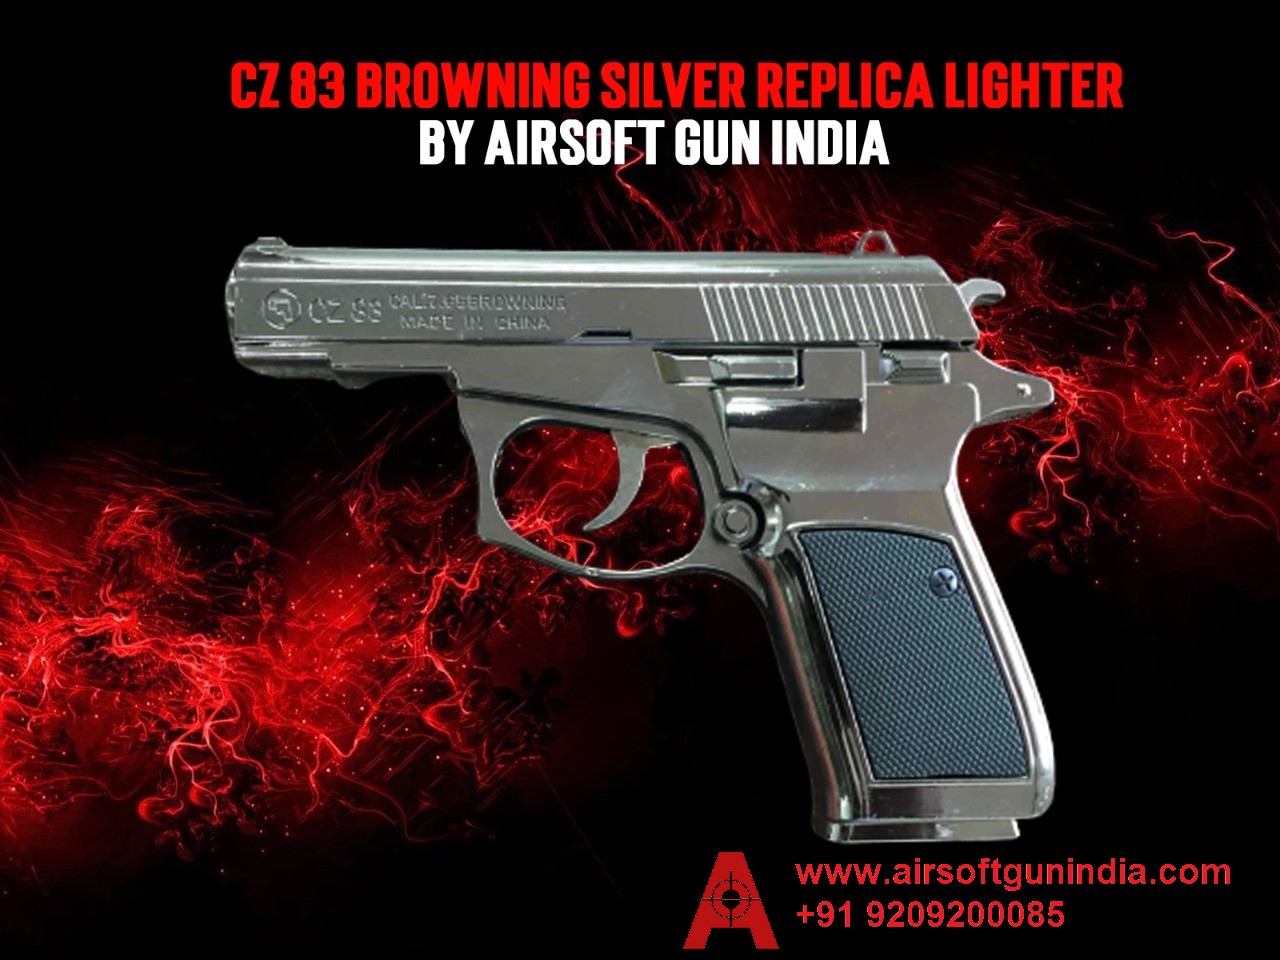 CZ 83 BROWNING SILVER REPLICA LIGHTER GUN BY AIRSOFT GUN INDIA